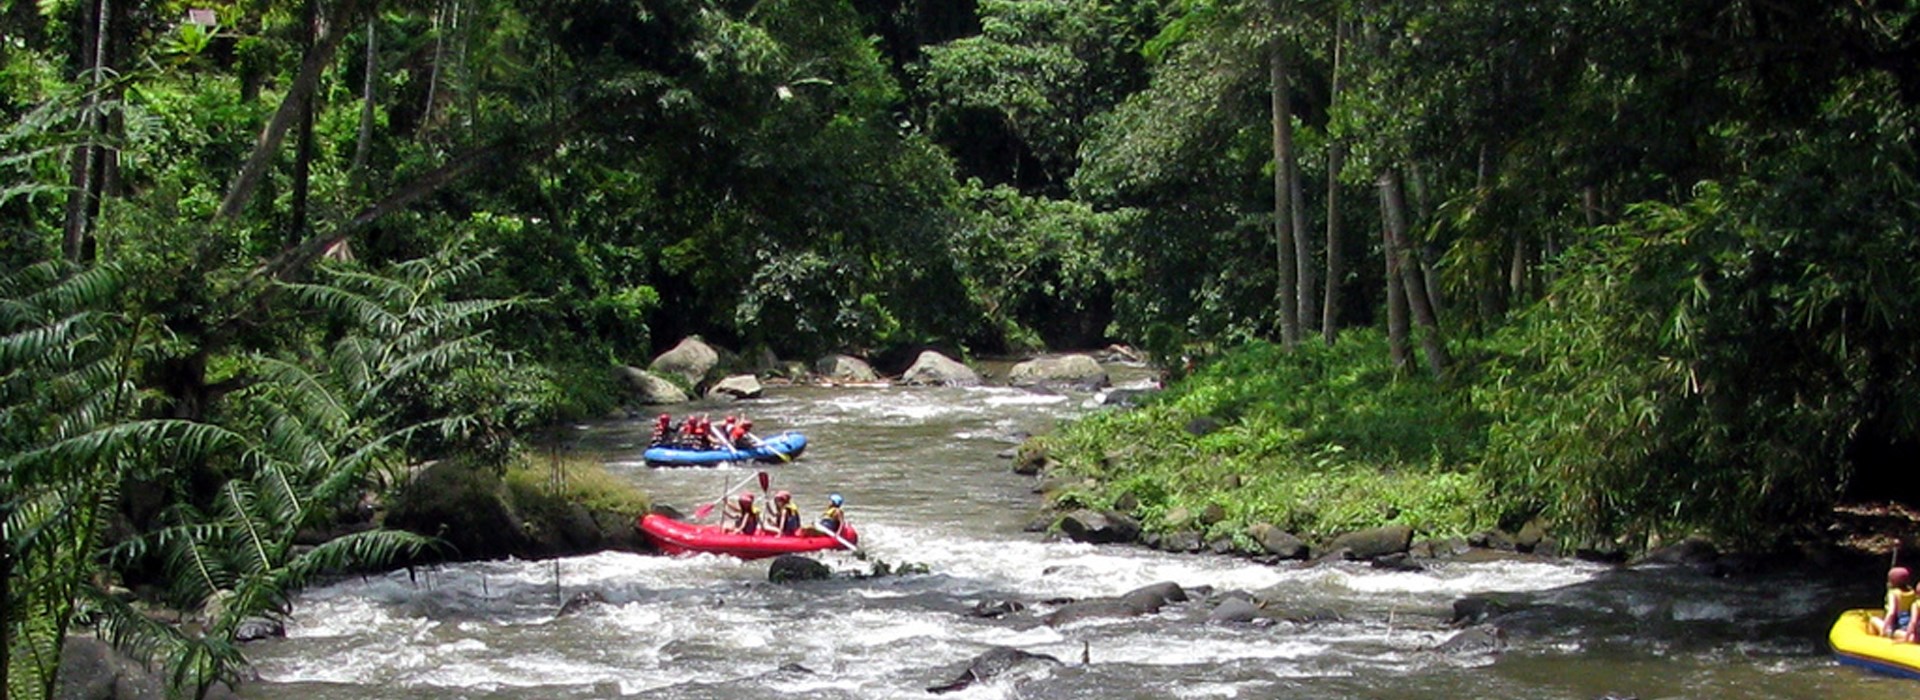 Visiter Les rapides de Telaga Waja en rafting - Indonesie